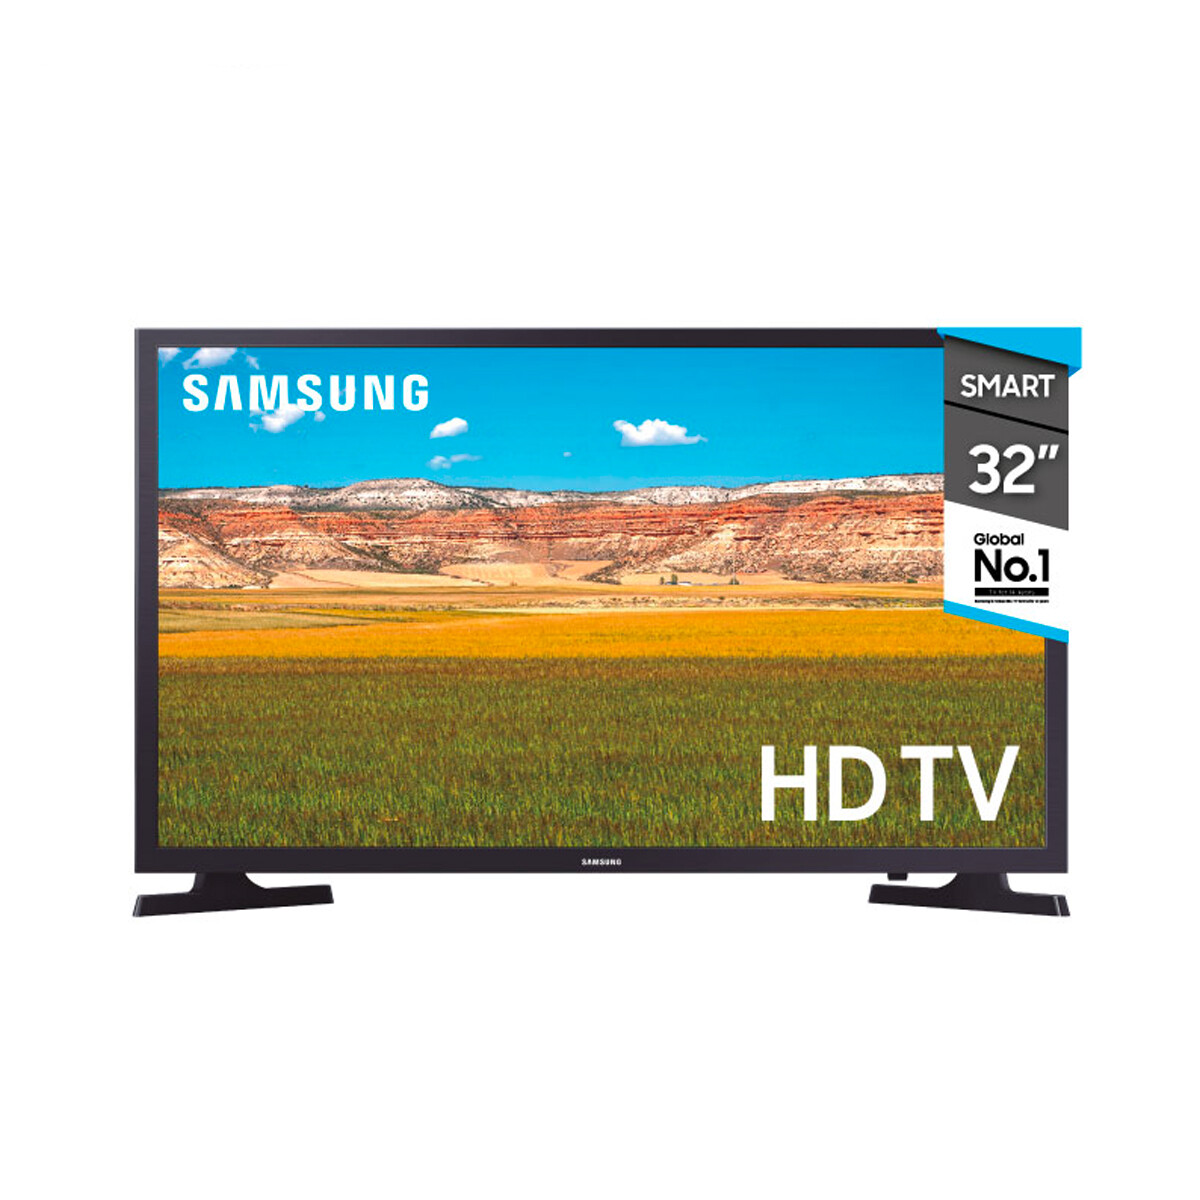 Smart TV HD Samsung 32" - UN32T4310 